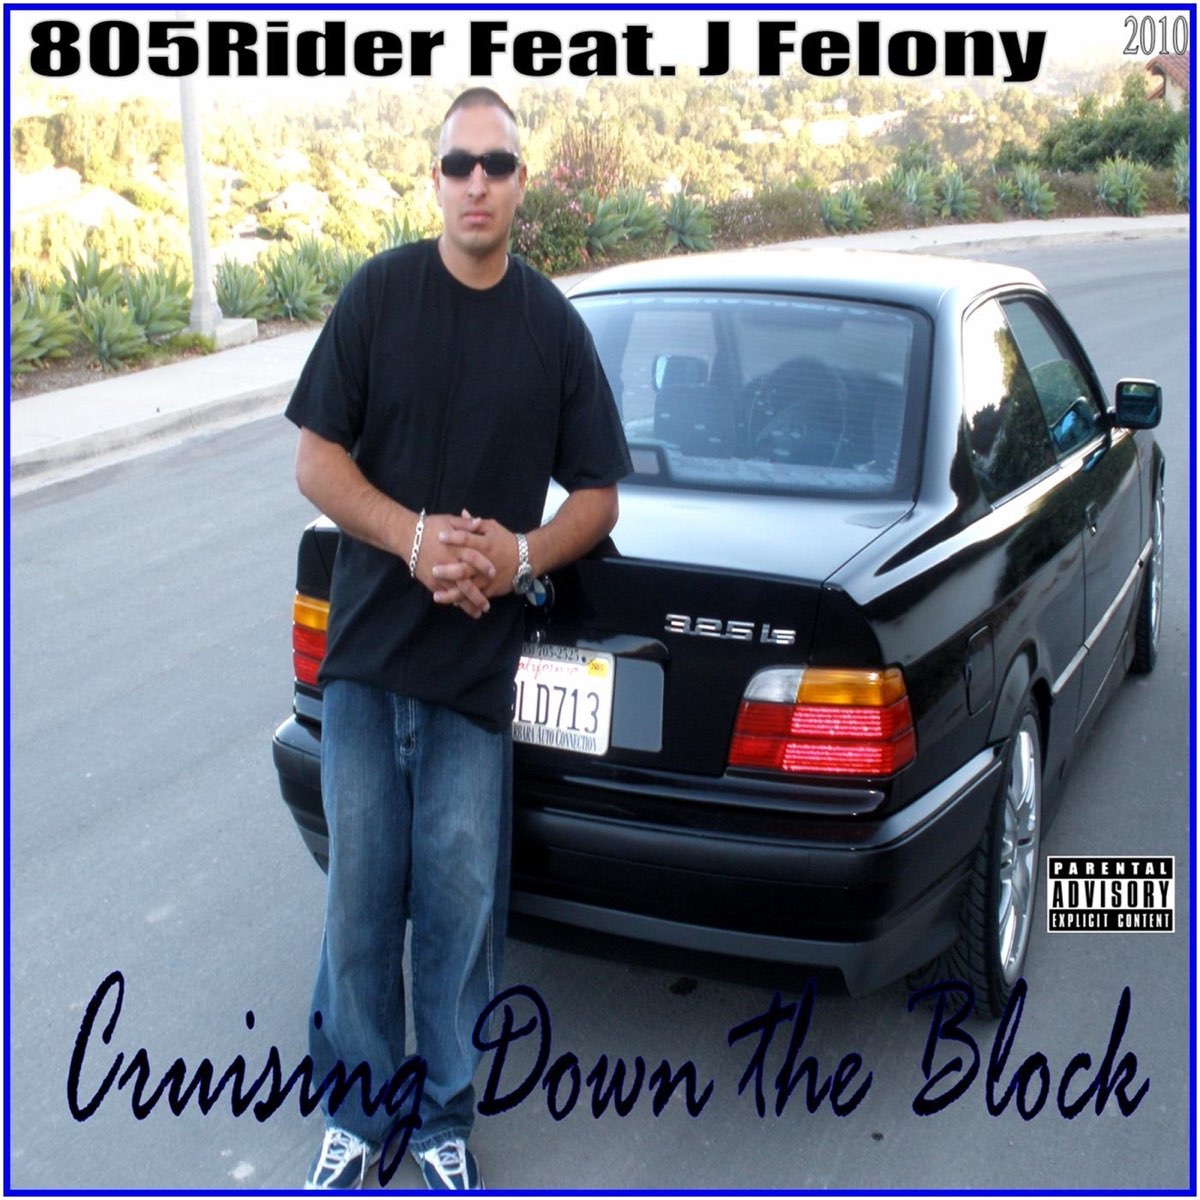 Cruisin down da Block. Cruising down the Street in my 64. Feat riders